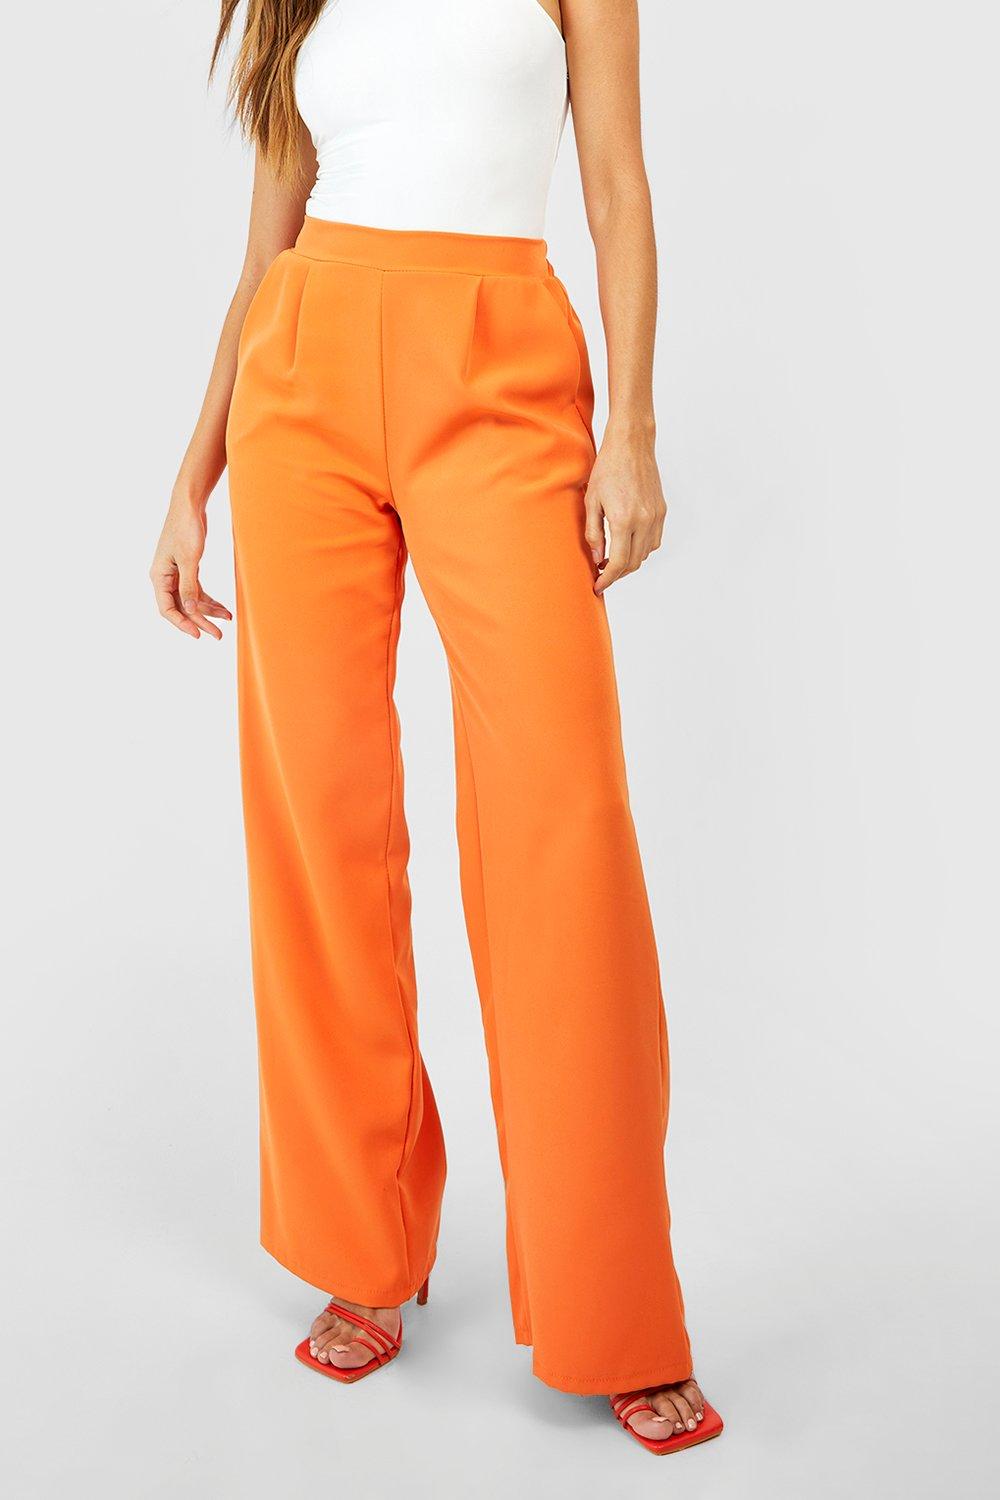 Orange wide-leg pants